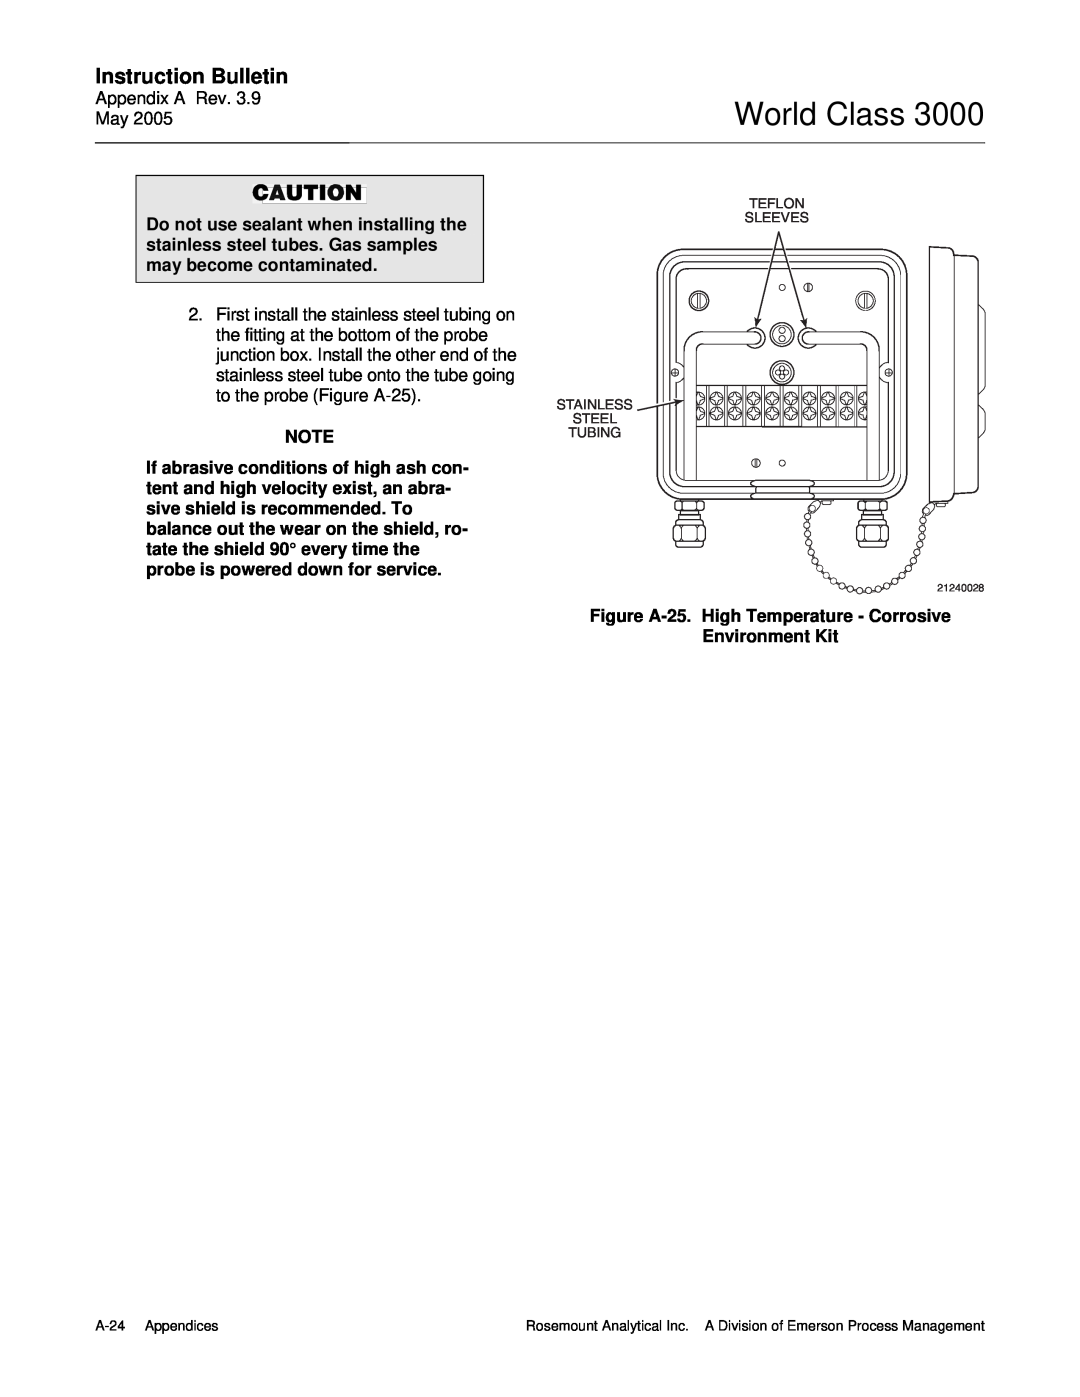 Emerson 3000 World Class, Instruction Bulletin, Figure A-25.High Temperature - Corrosive, Environment Kit 